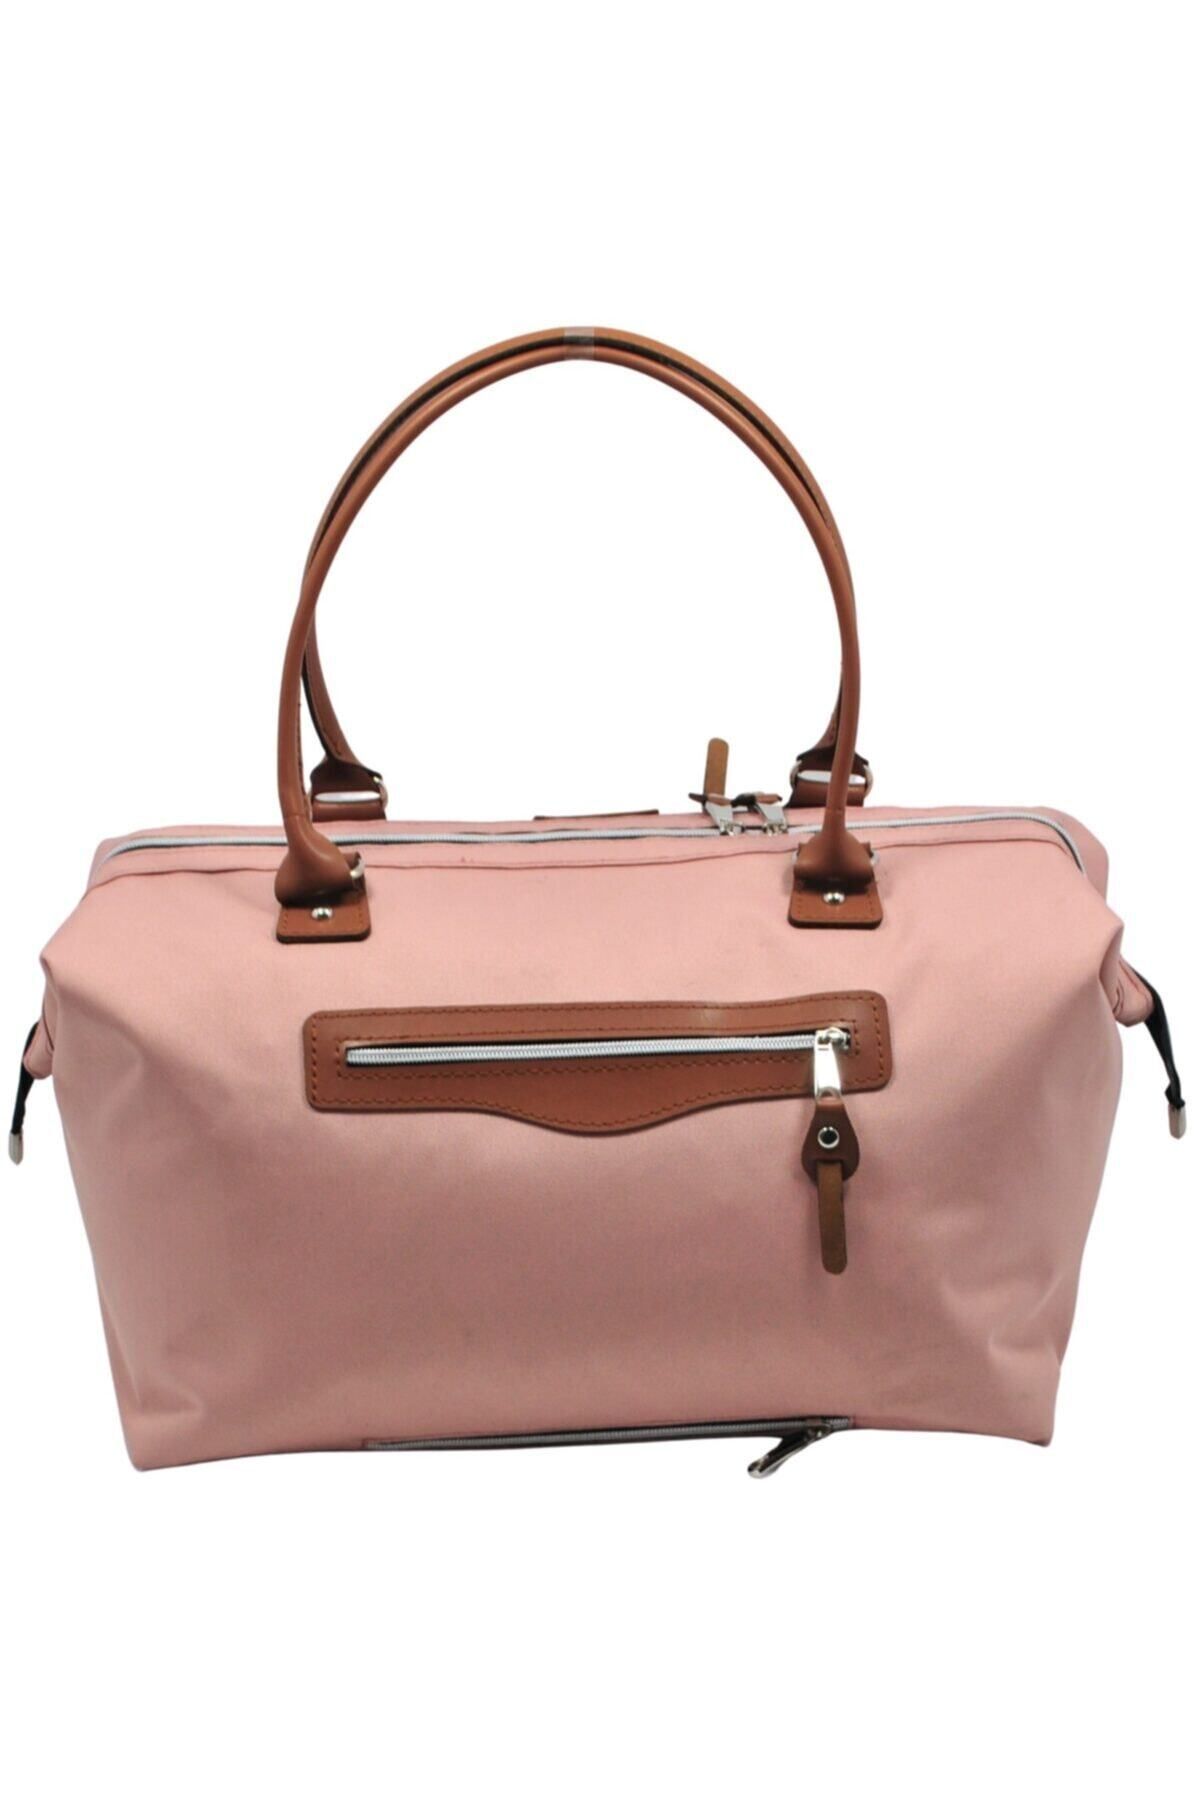 YOGII Baby Care Bag - Pink - Textile - Trendyol